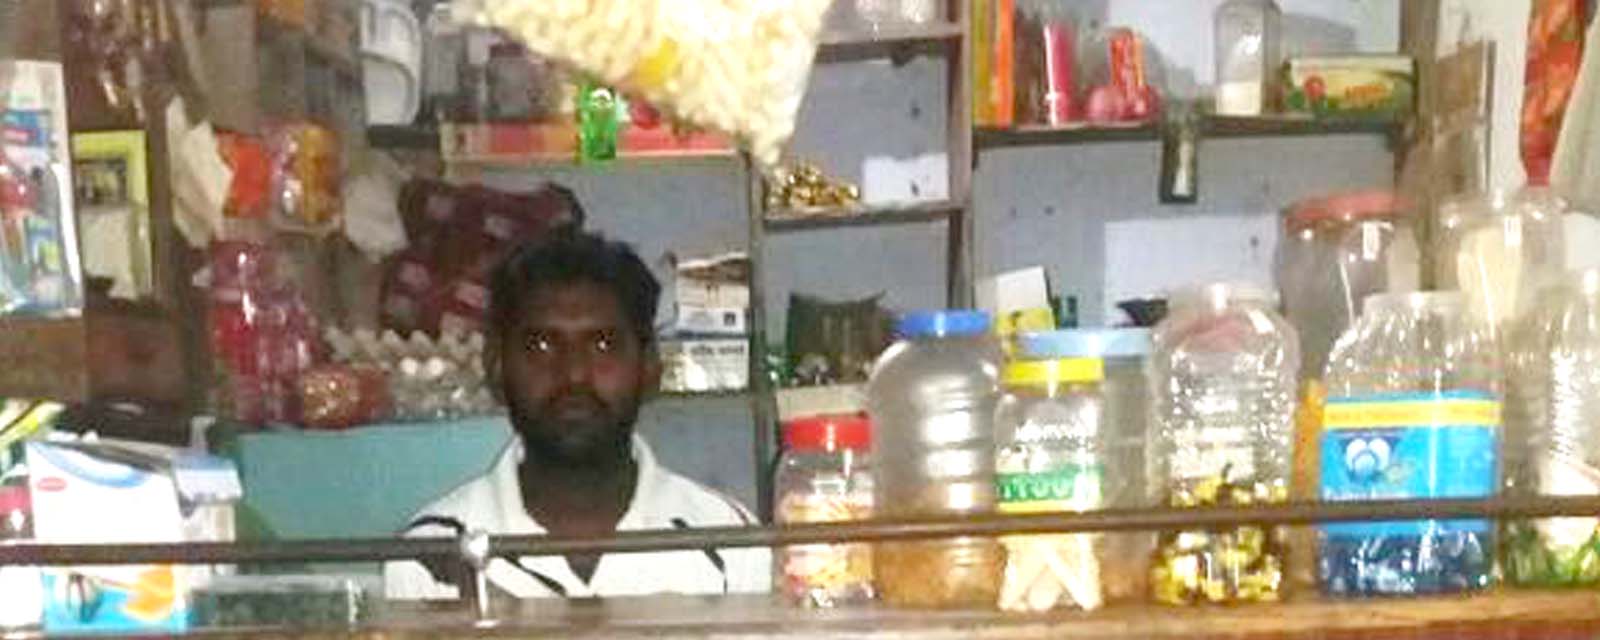 Gagan Kumar in Grocery Shop